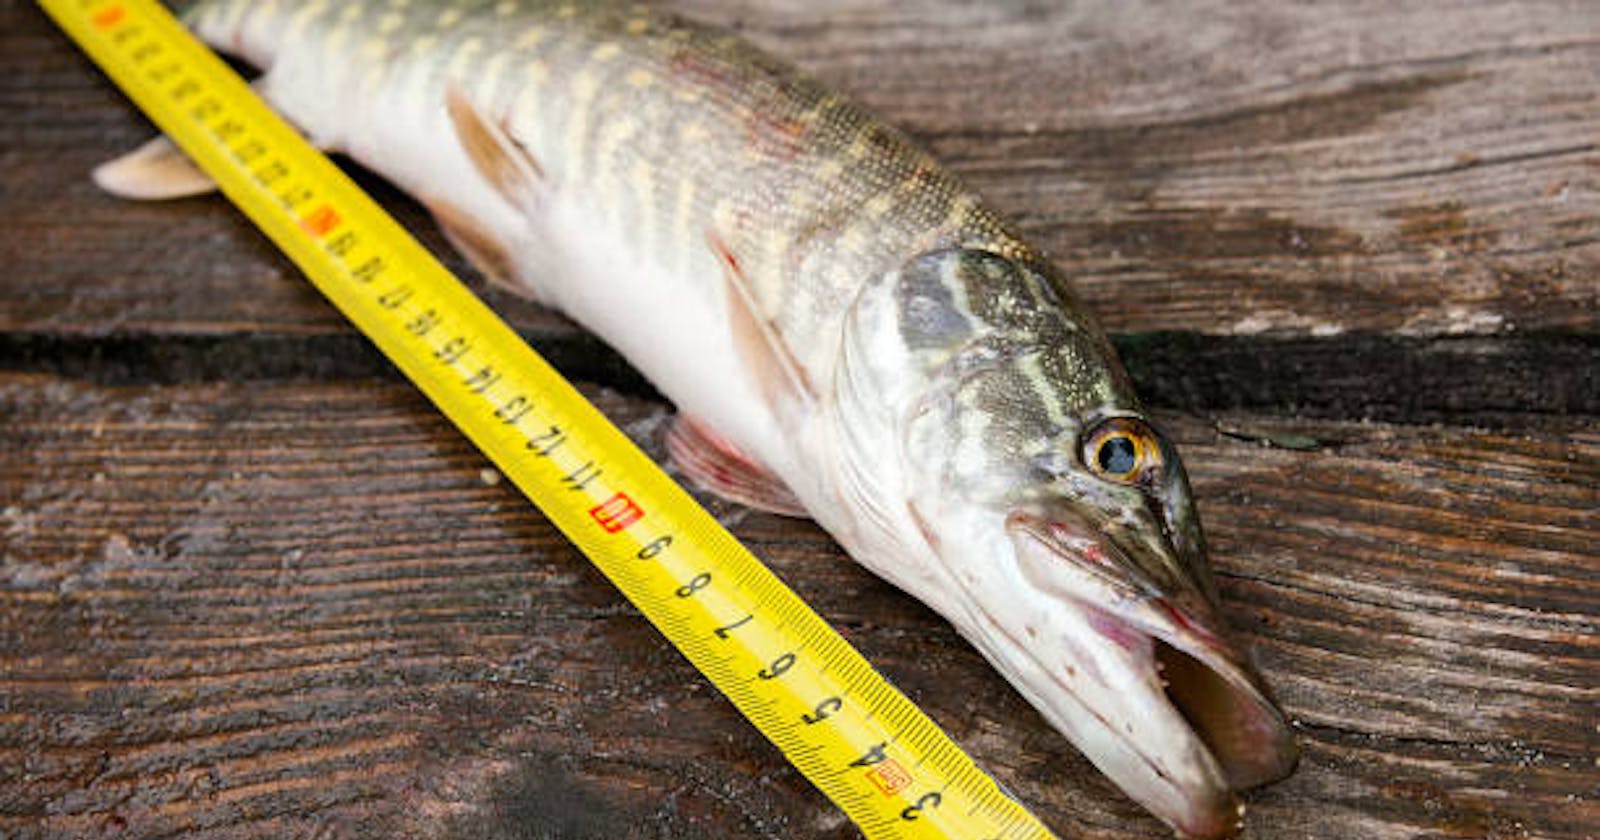 How do you measure your catch